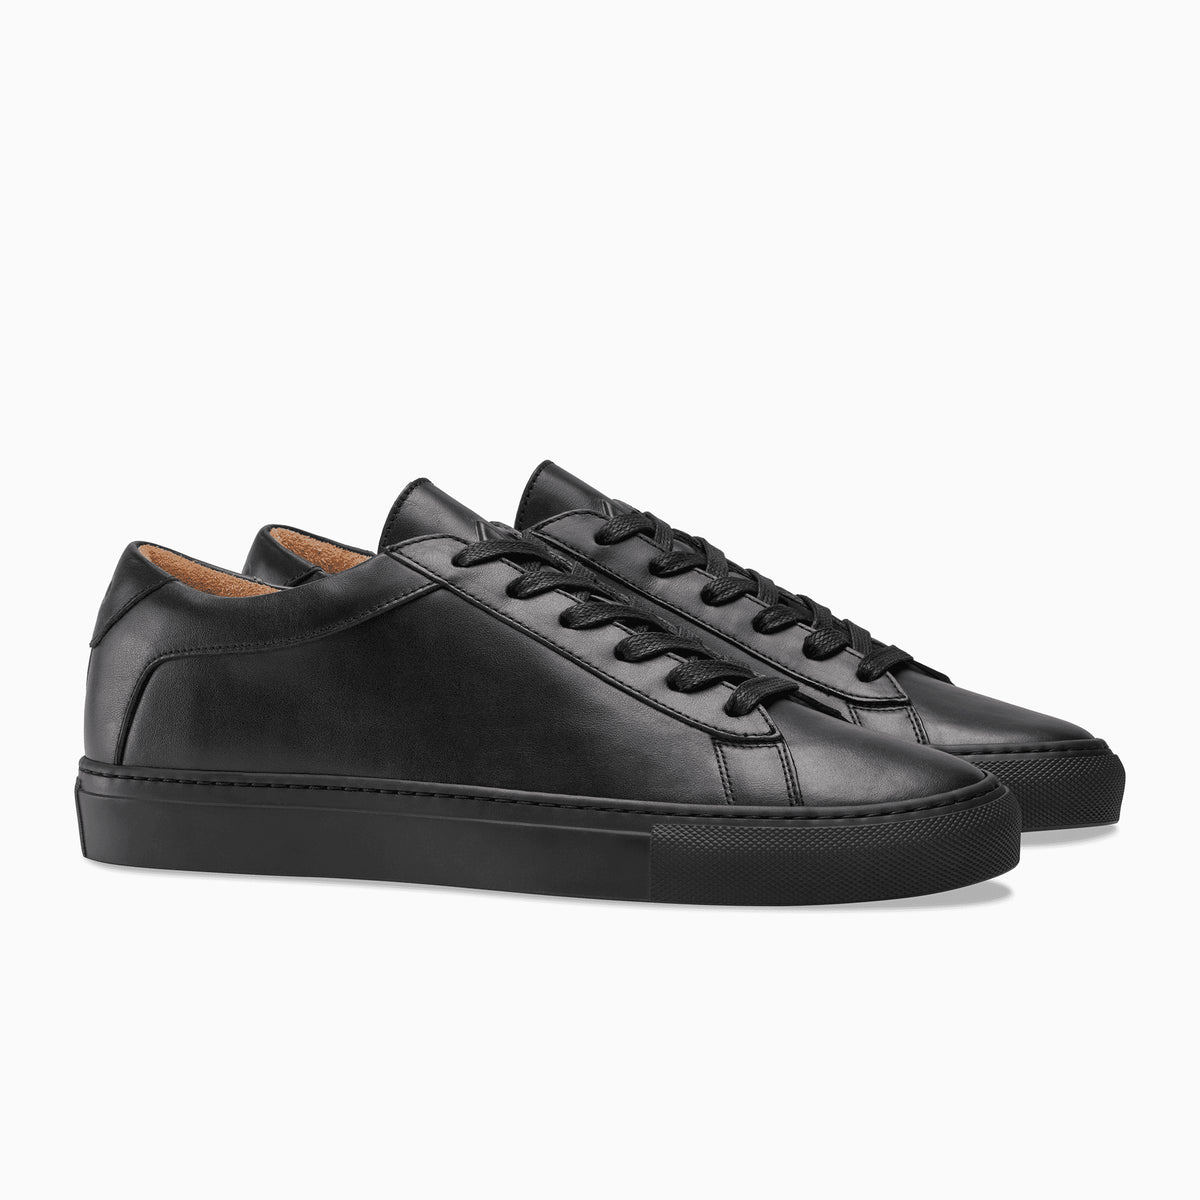 clean 9 sneaker black leather